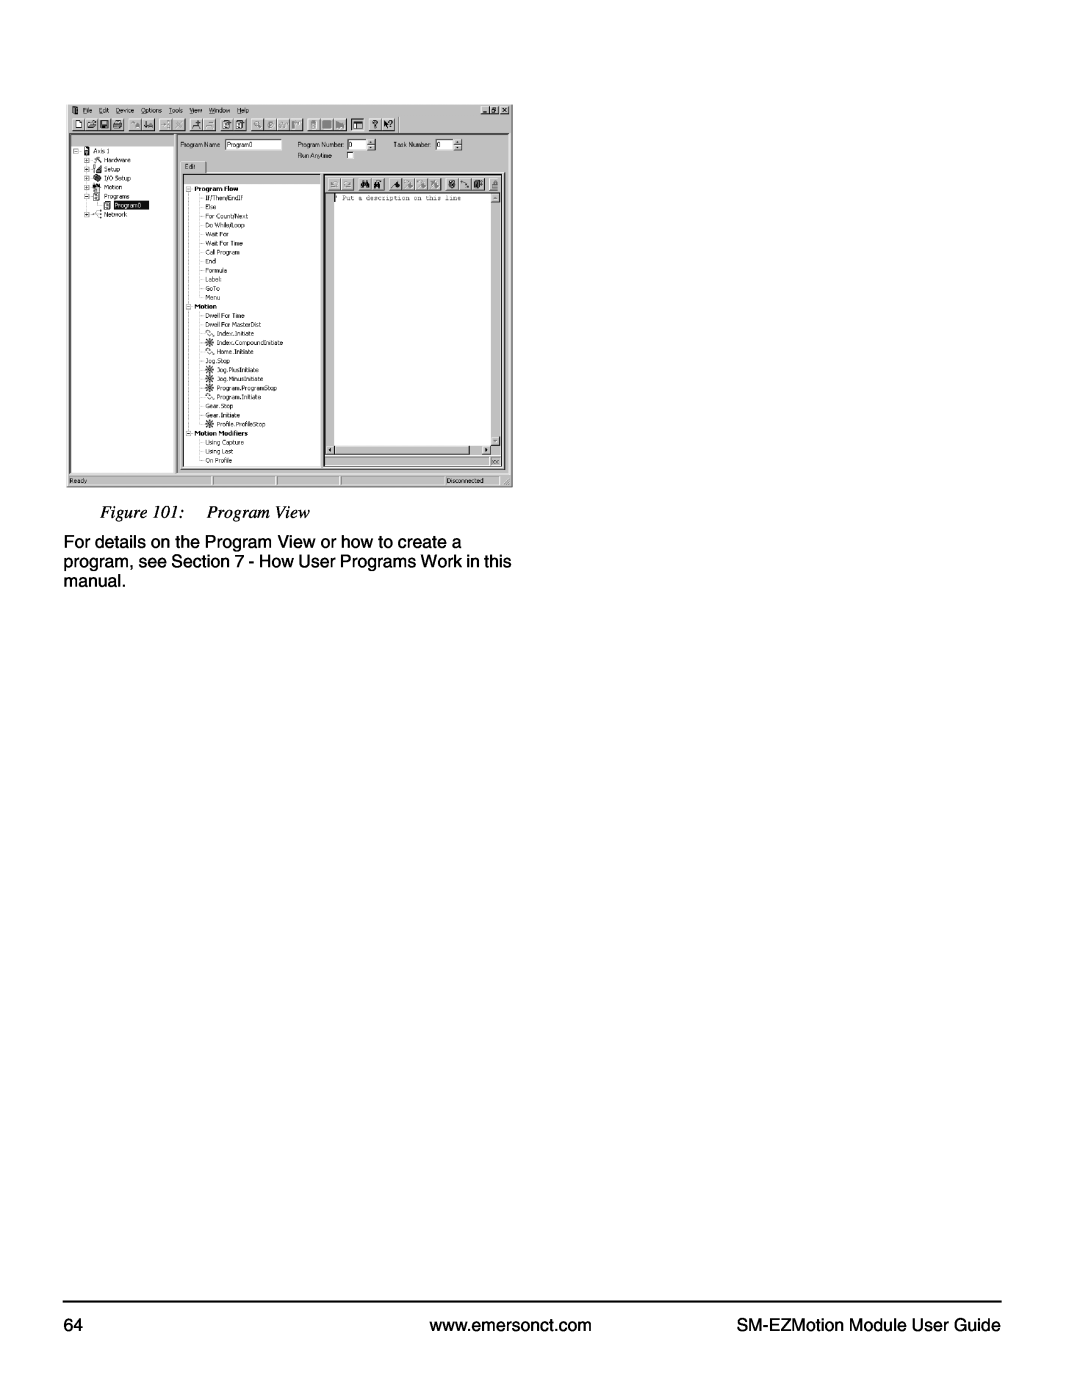 Emerson P/N 400361-00 manual Program View, SM-EZMotion Module User Guide 